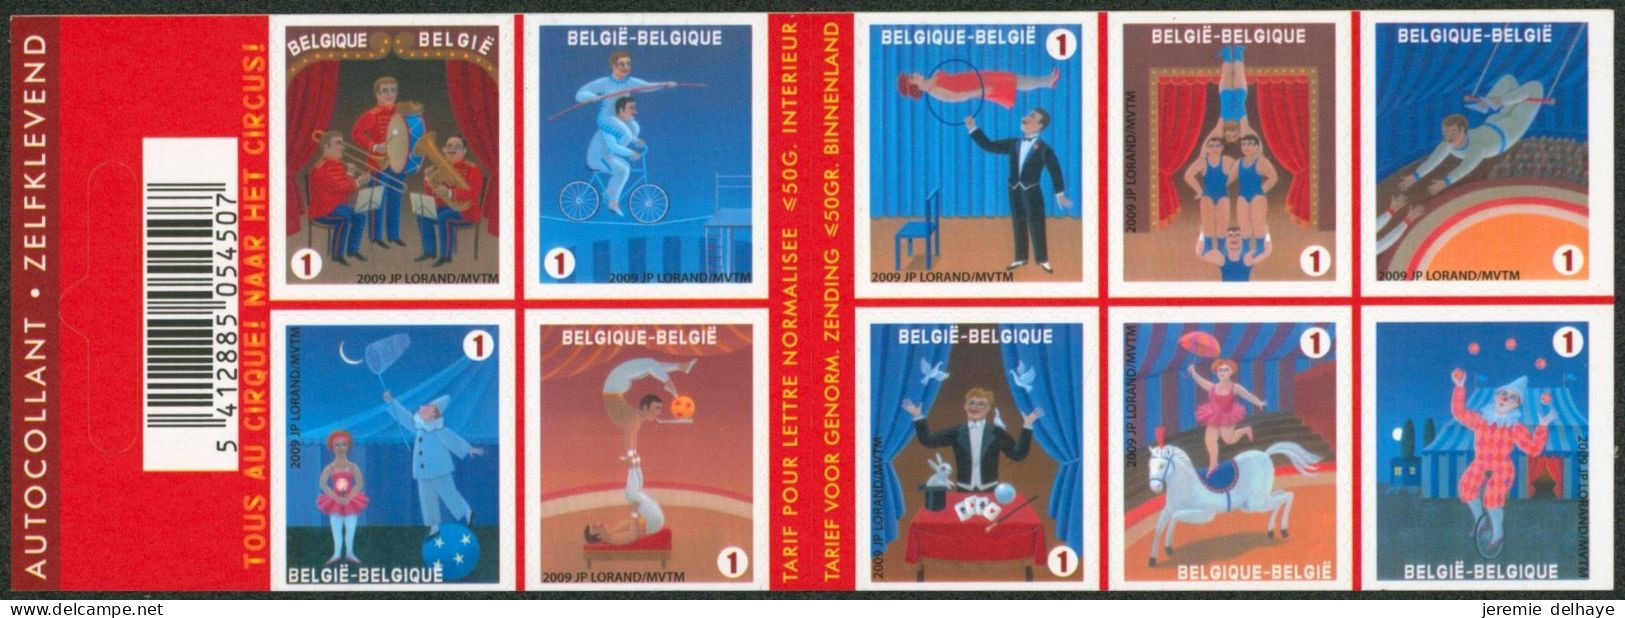 Carnet (2009) - B105** (MNH) Carnet De 10 Timbres Sur Le Cirque / Circus. - 1997-… Permanente Geldigheid [B]